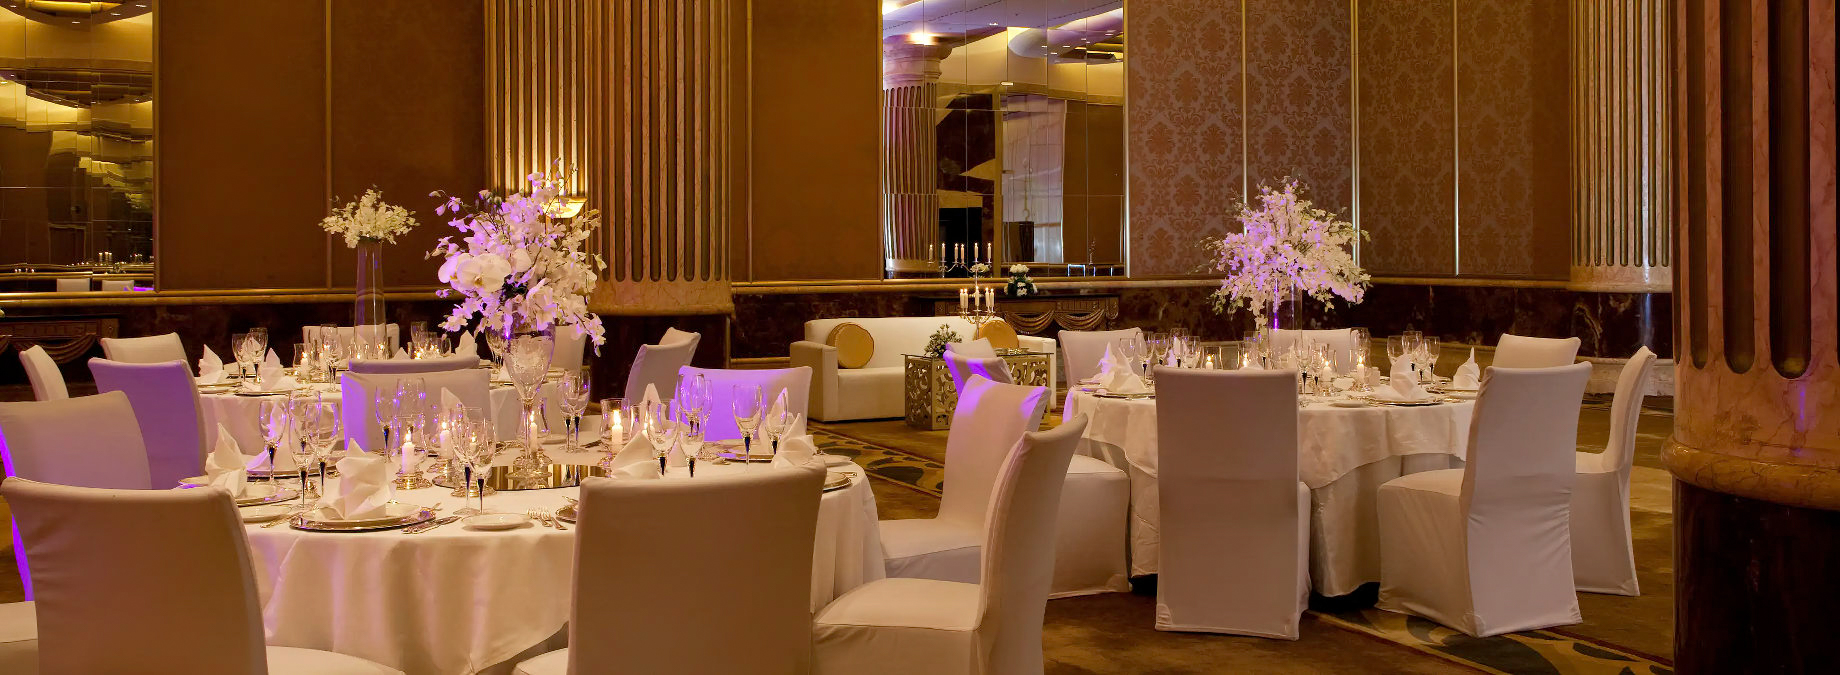 Al Faisaliah Hotel – Riyadh, Saudi Arabia – Ballroom